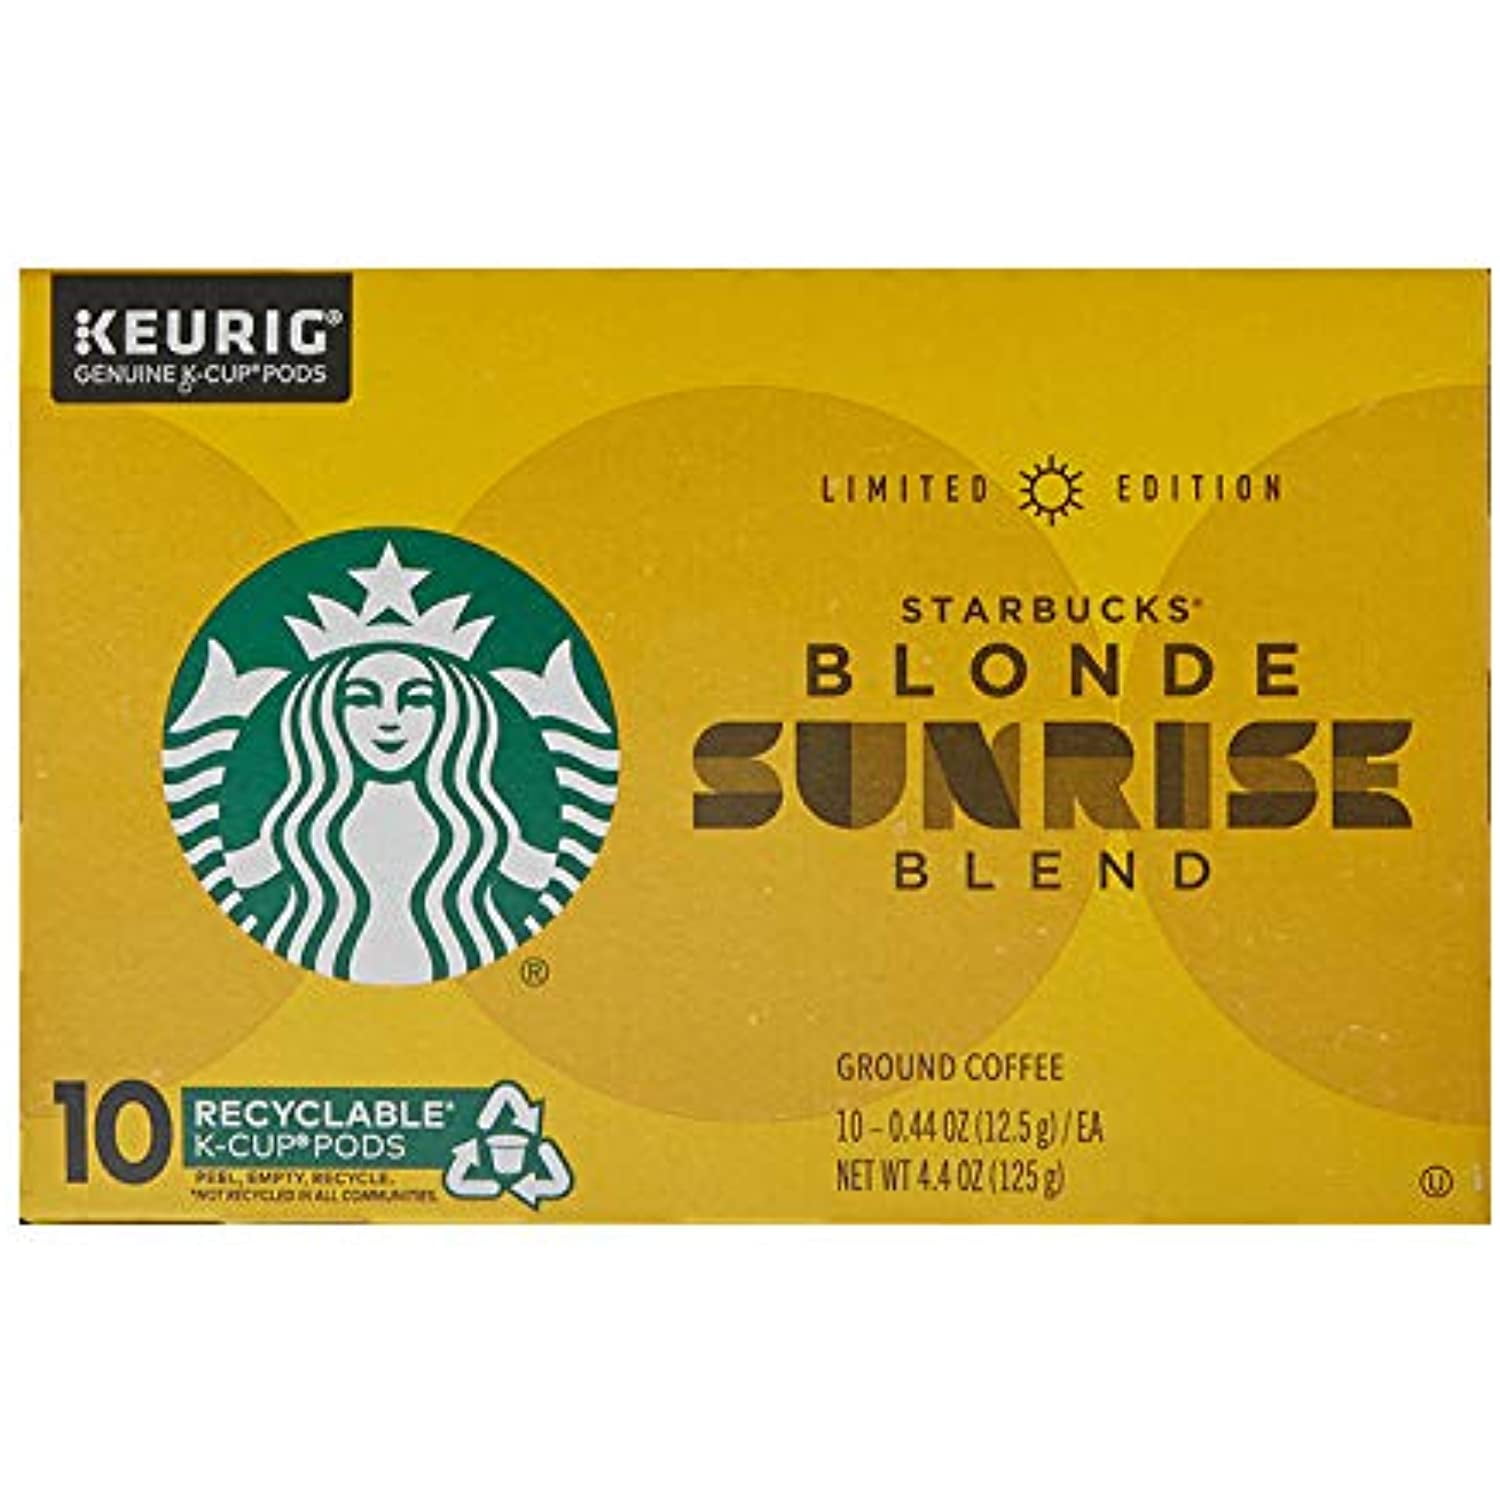 Starbucks Sunrise Blend Coffee K Cup Pods Blonde Roast Coffee Pods